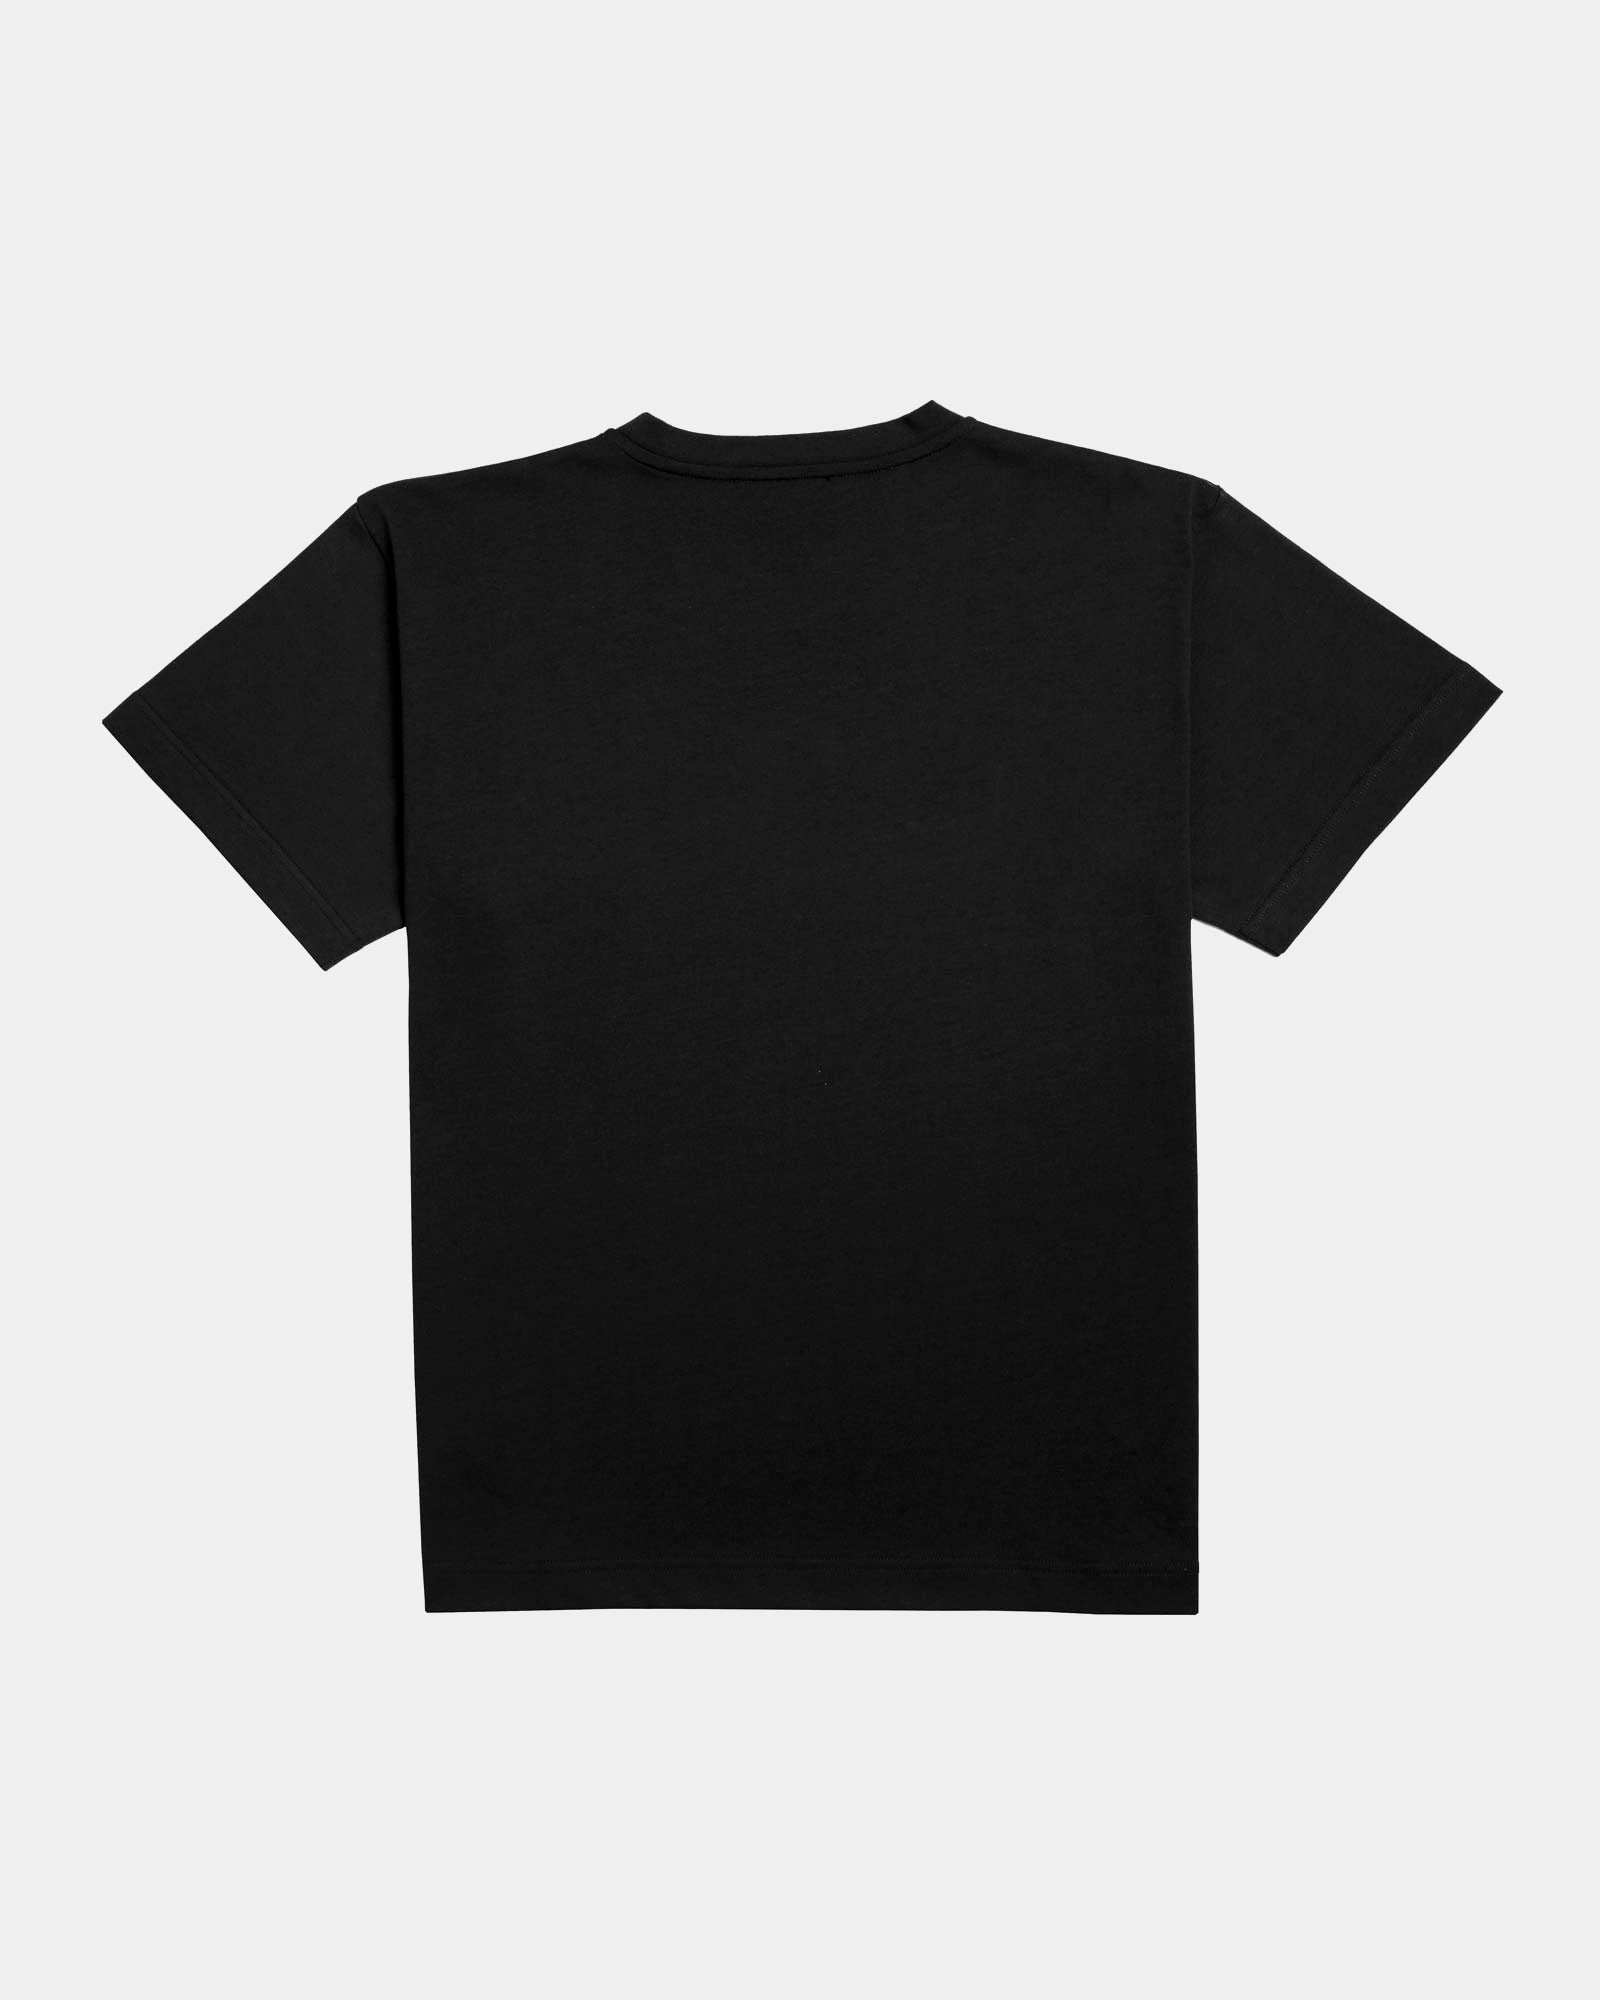 Camiseta negra oversize - Camisetas básicas estilo oversize - Ropa Online - Dicci